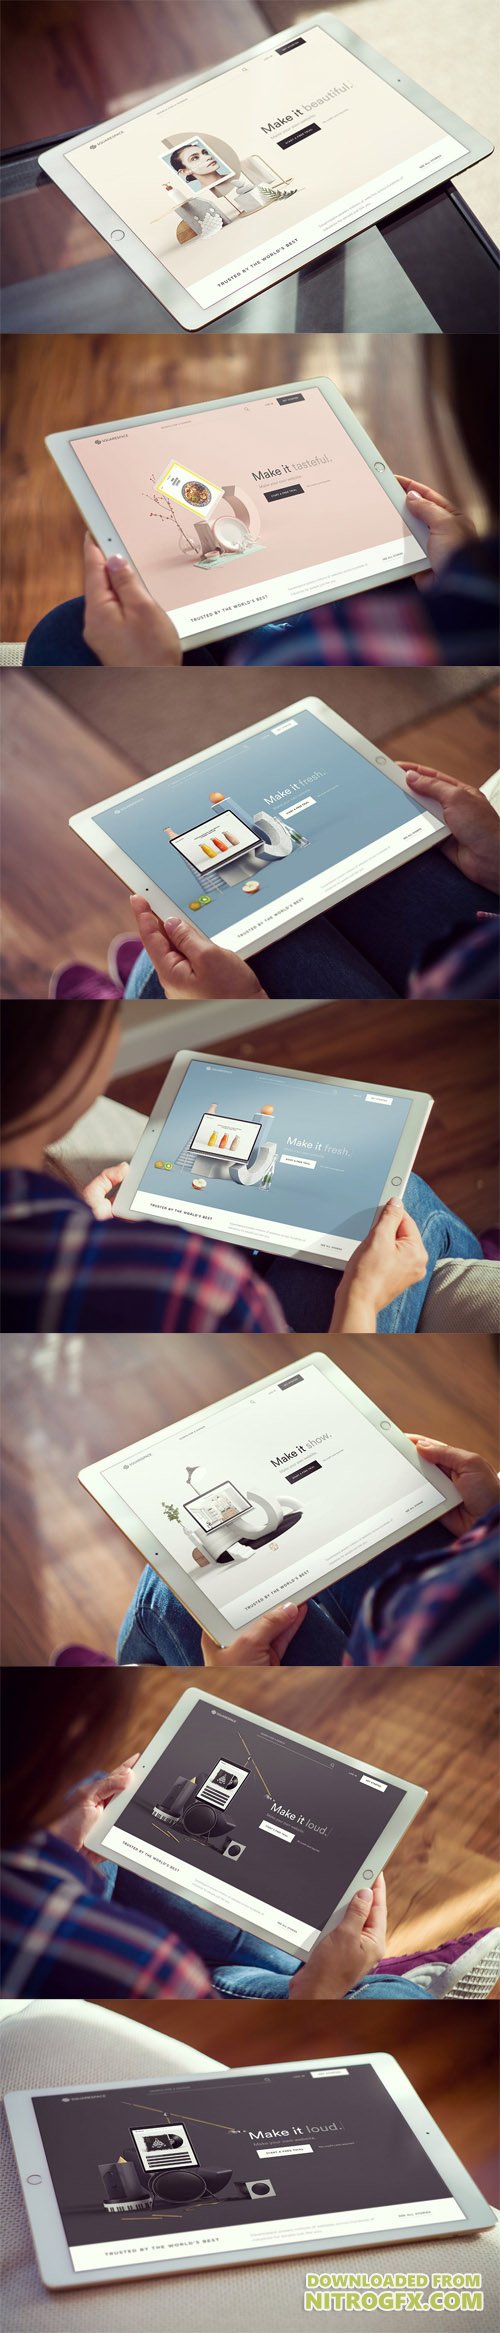 iPad Pro Mockups v5